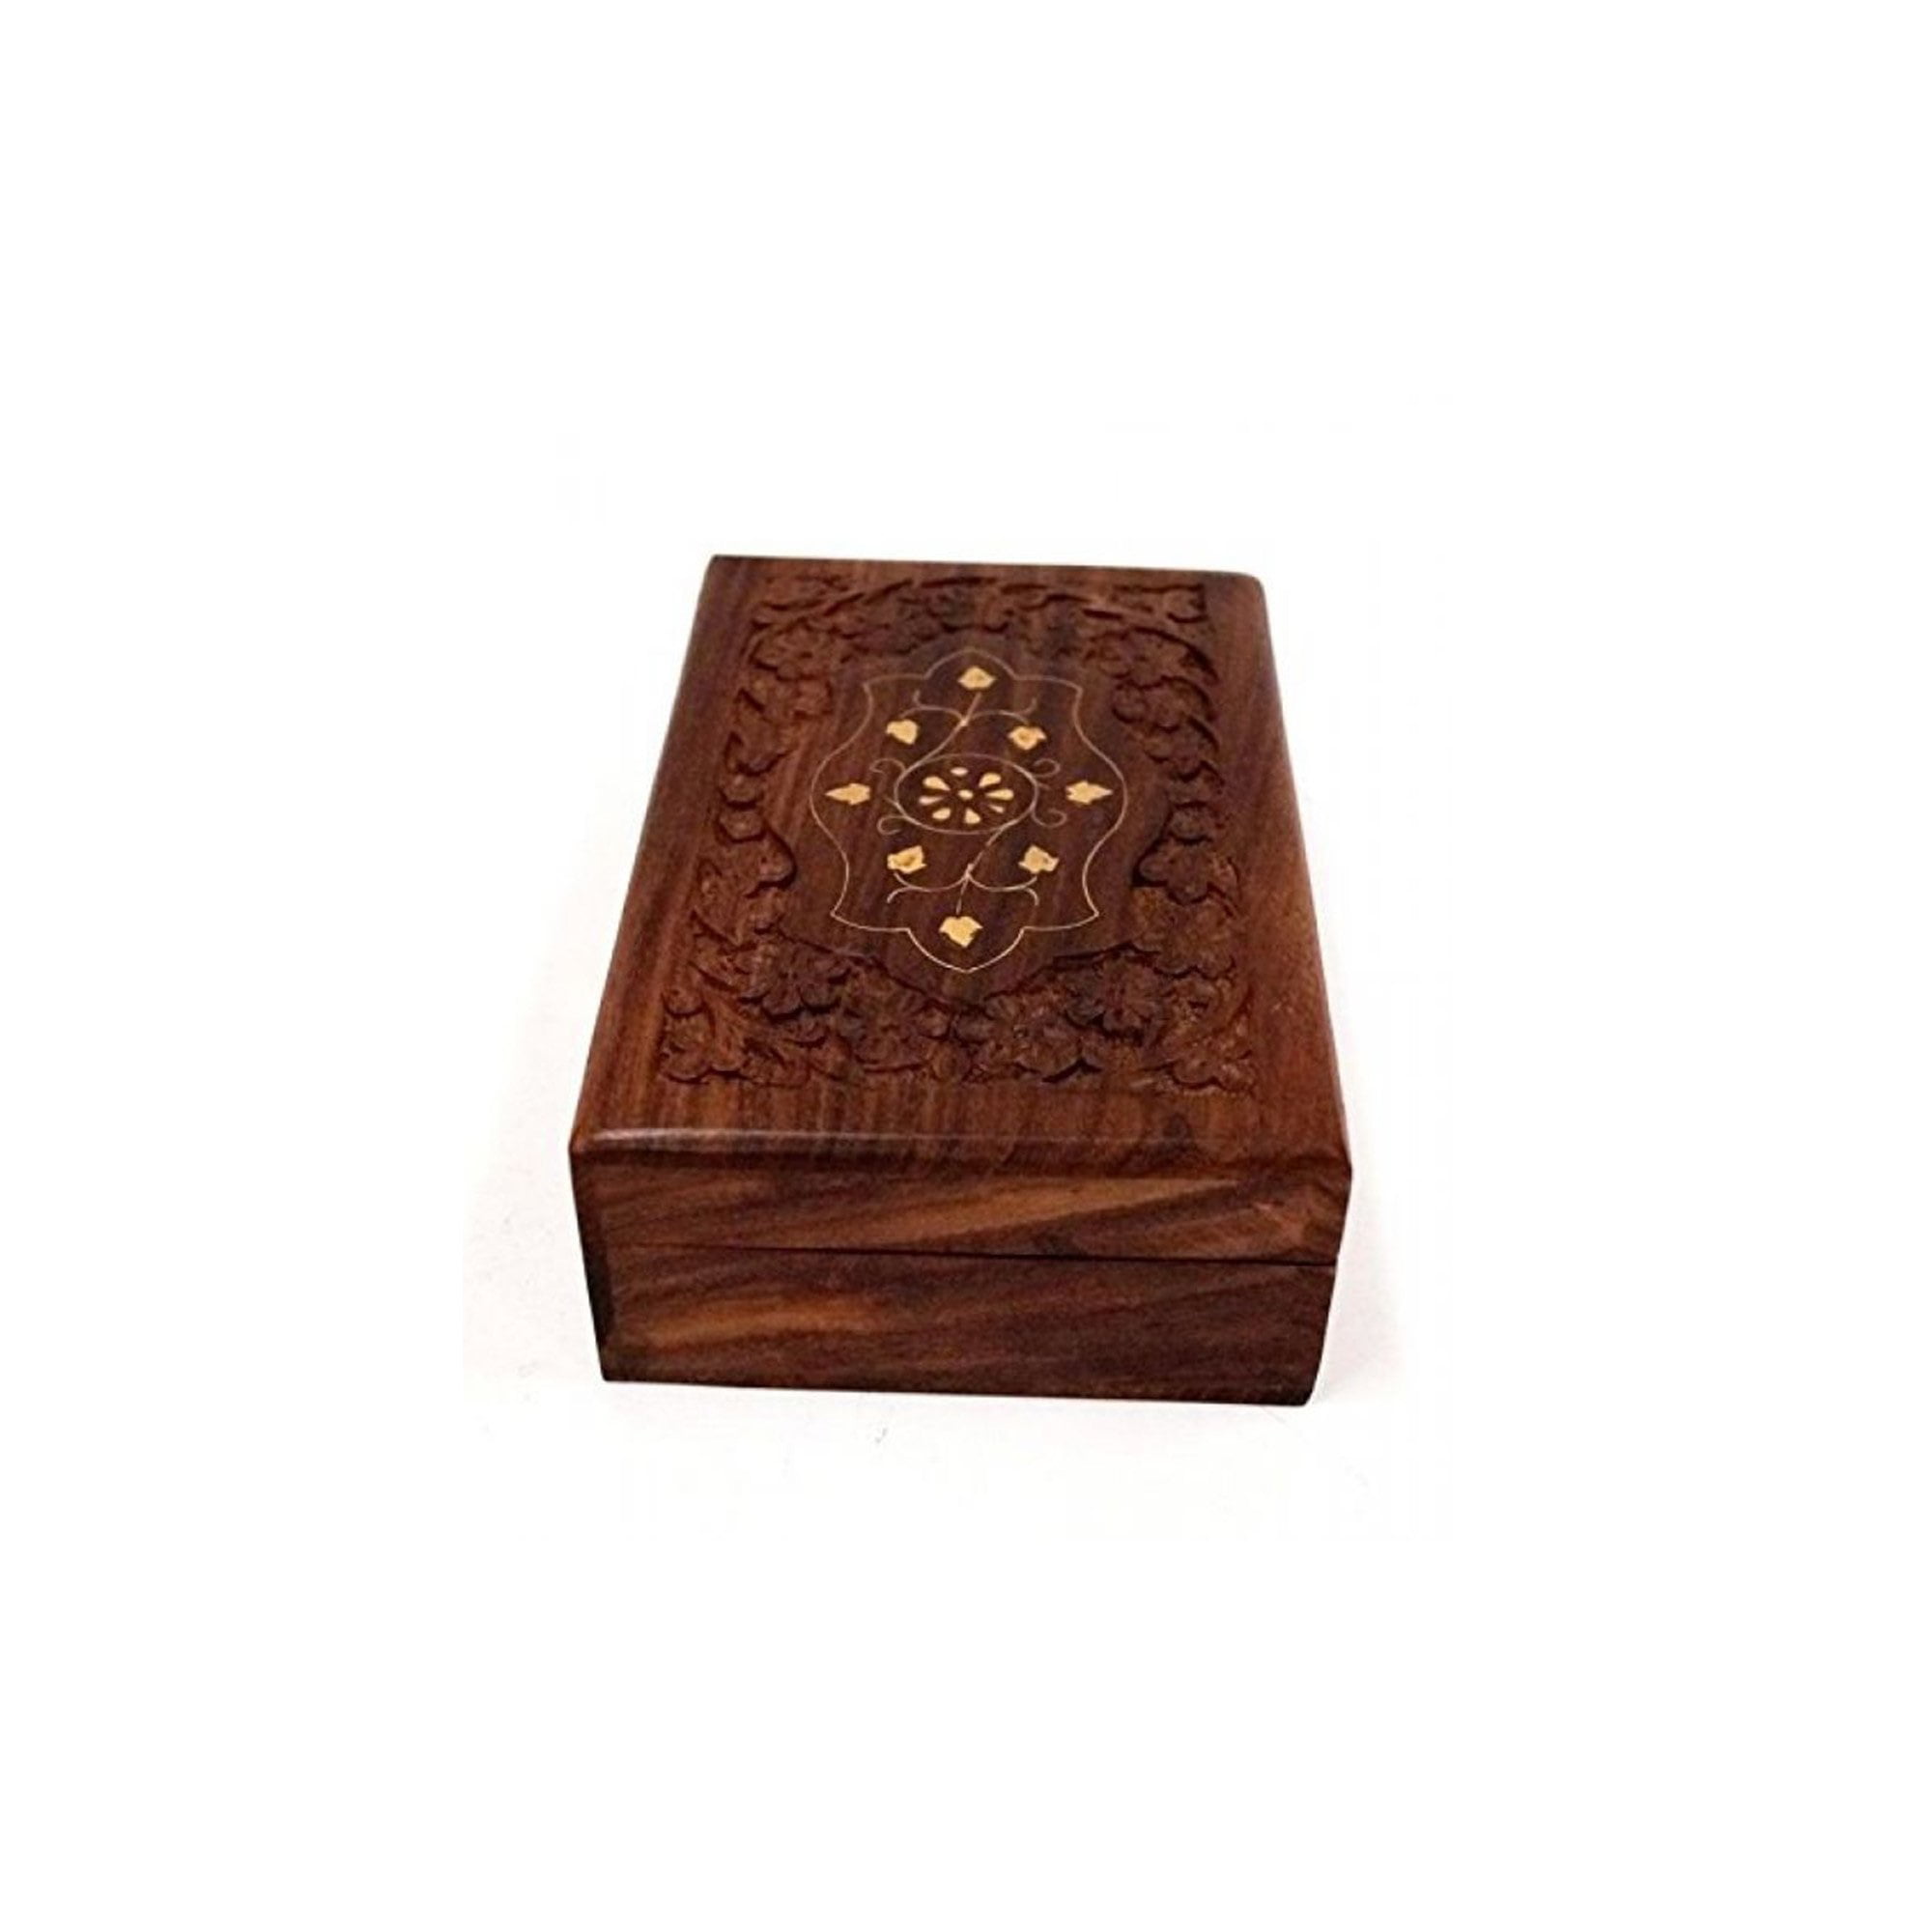 Antique Wooden Box Book Shaped Teak Wood Handmade Trinket Storage Collectible 